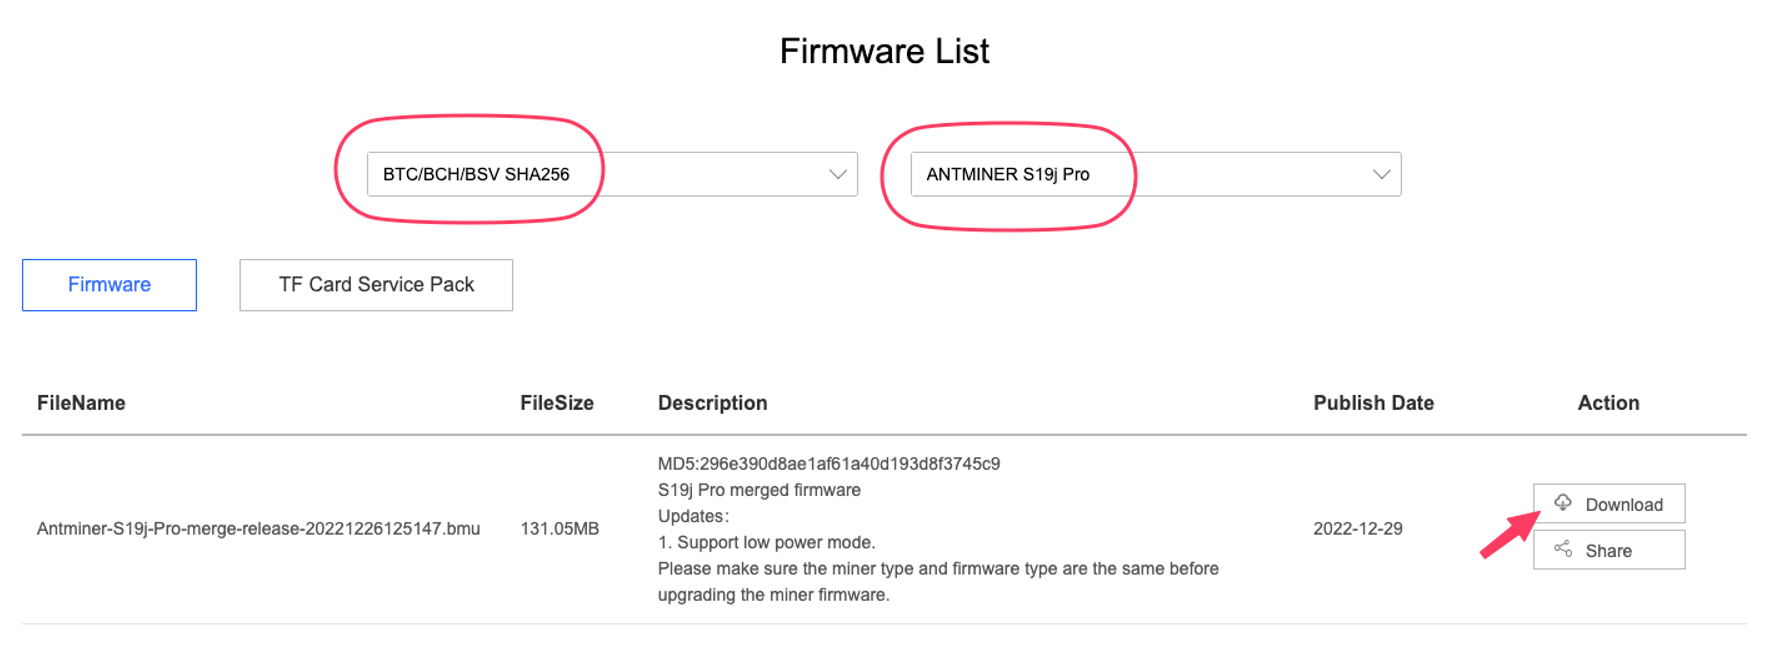 Firmware list bitmain image download